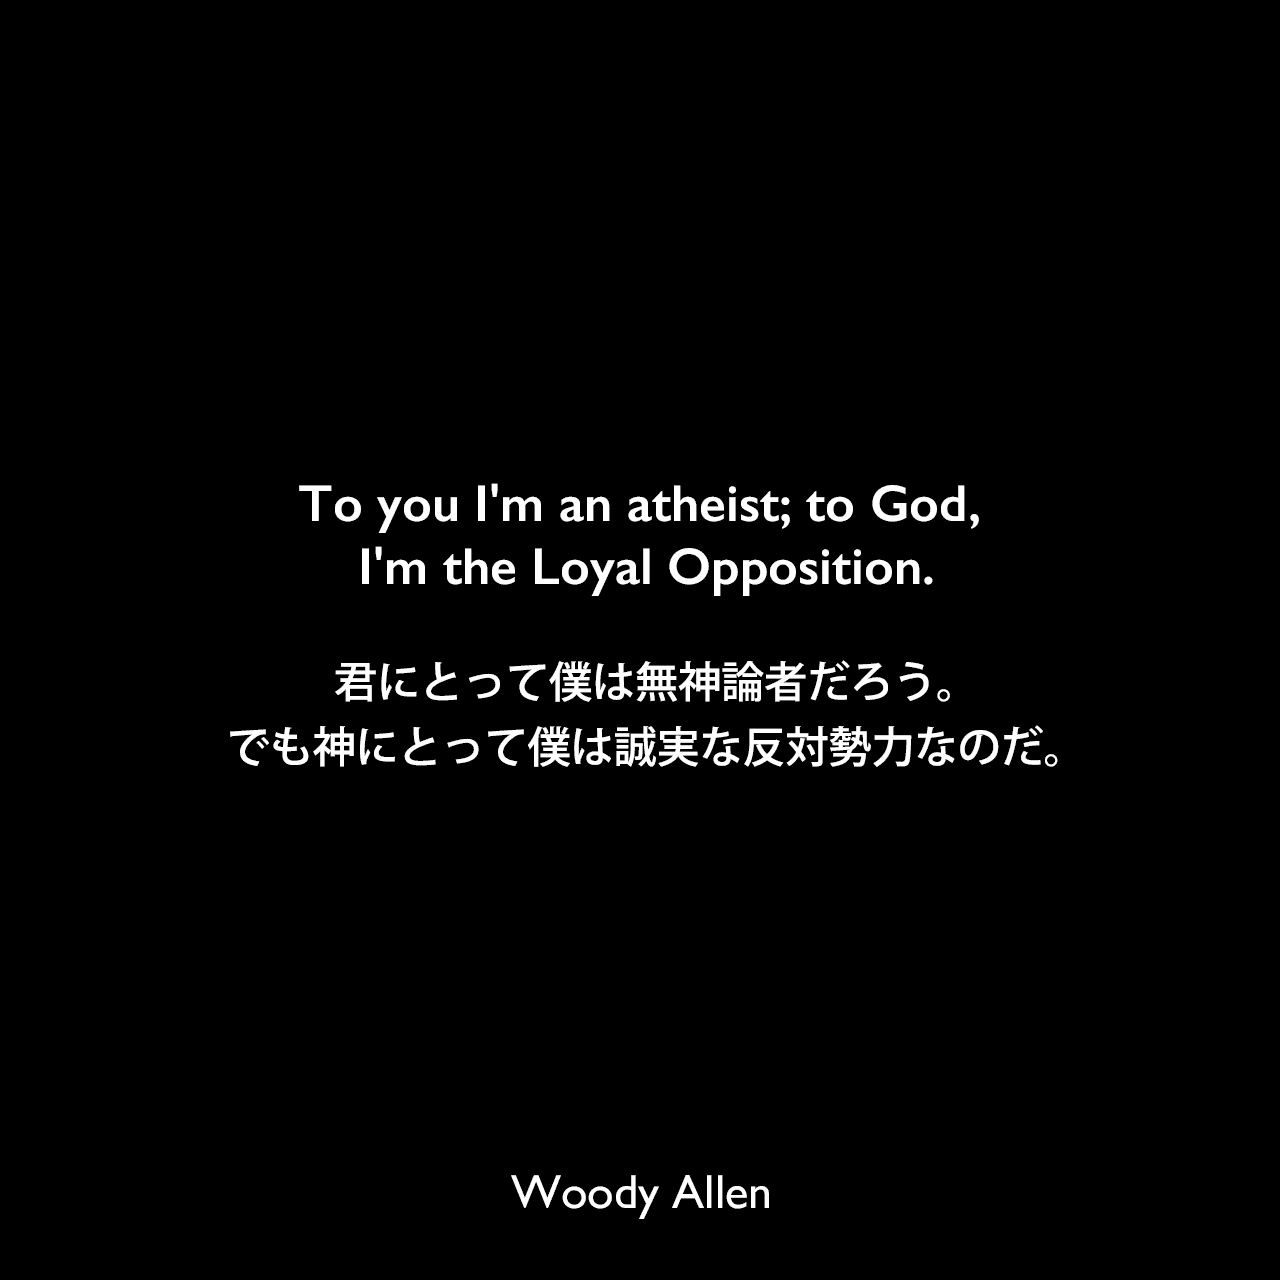 To you I'm an atheist; to God, I'm the Loyal Opposition.君にとって僕は無神論者だろう。でも神にとって僕は誠実な反対勢力なのだ。Woody Allen